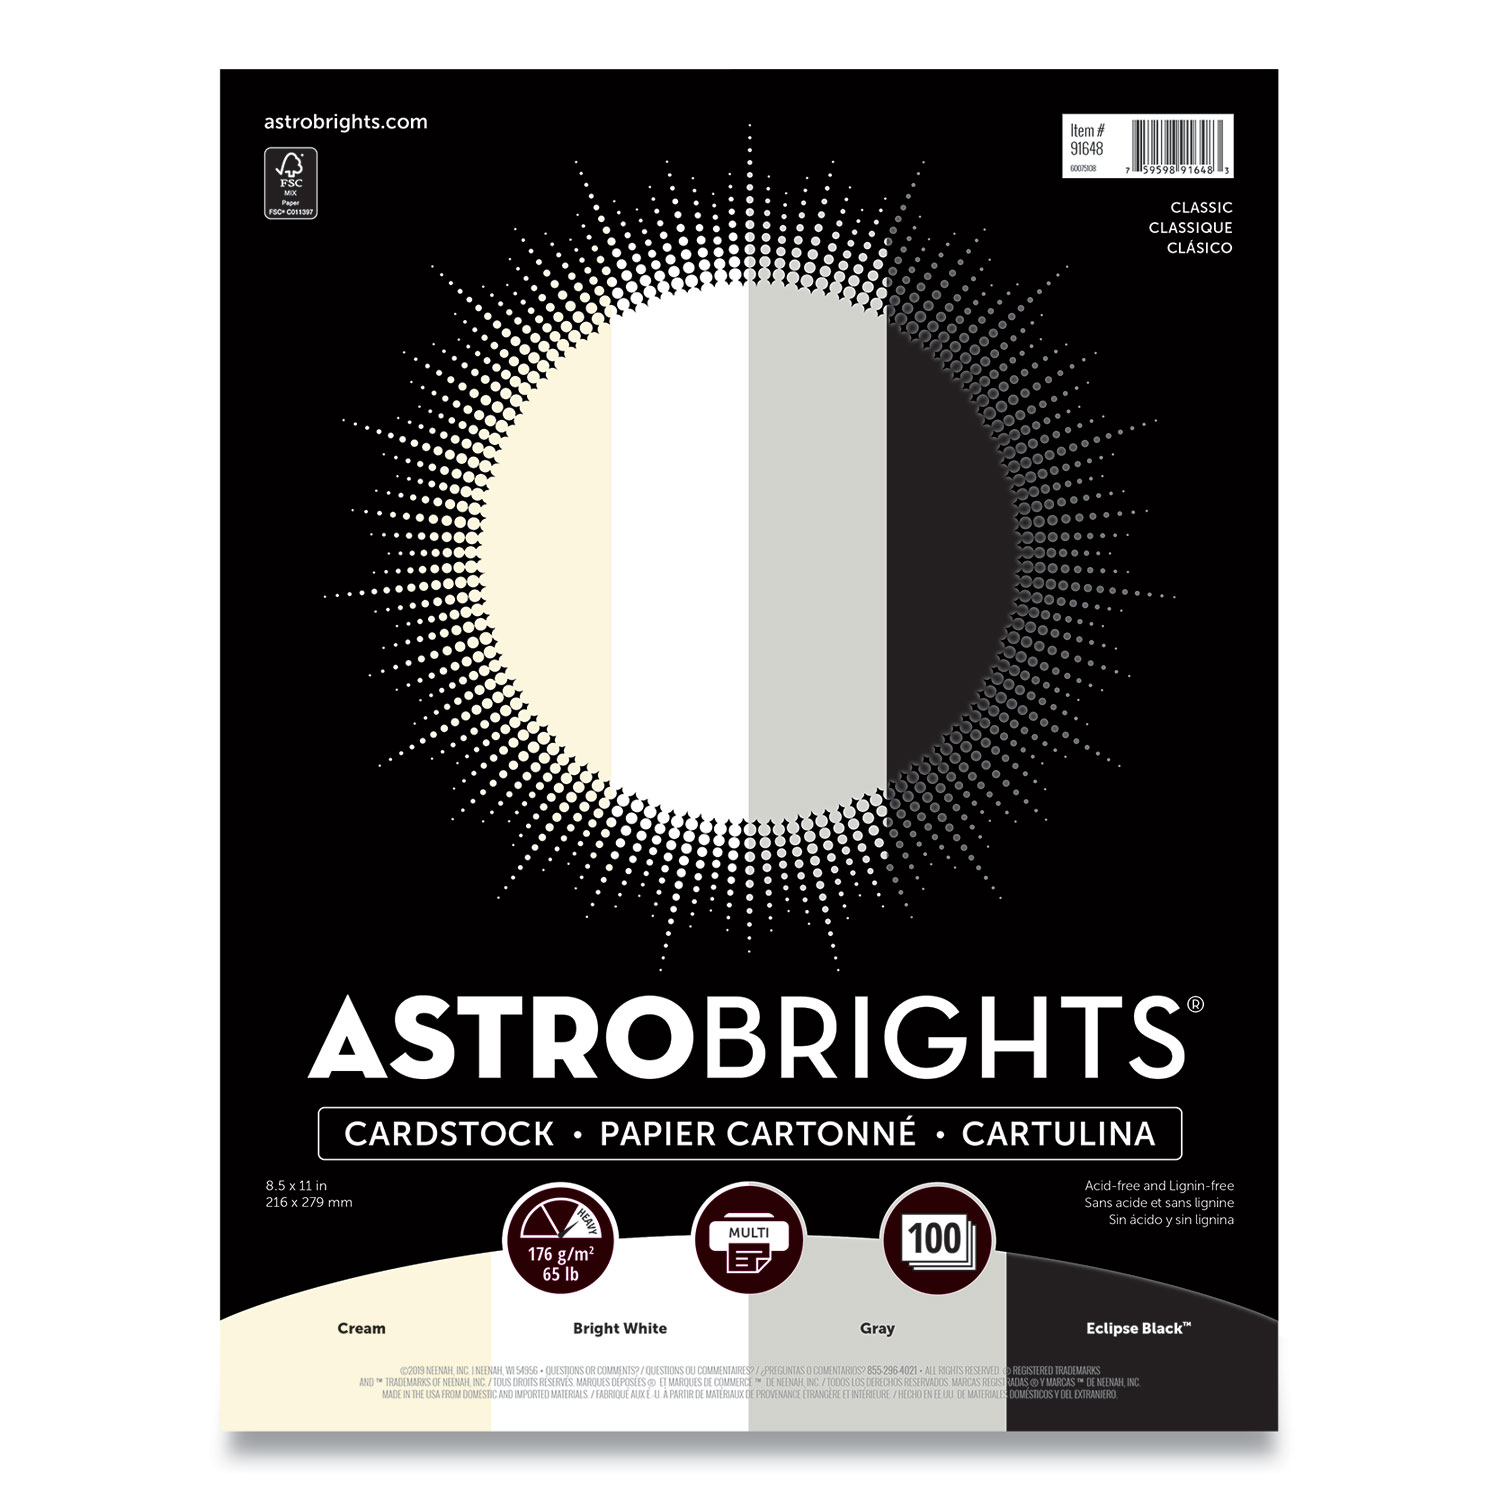 Astrobrights® Color Cardstock - Classic Assortment, 65 lb, 8.5 x 11, Assorted Classic Colors, 100/Pack